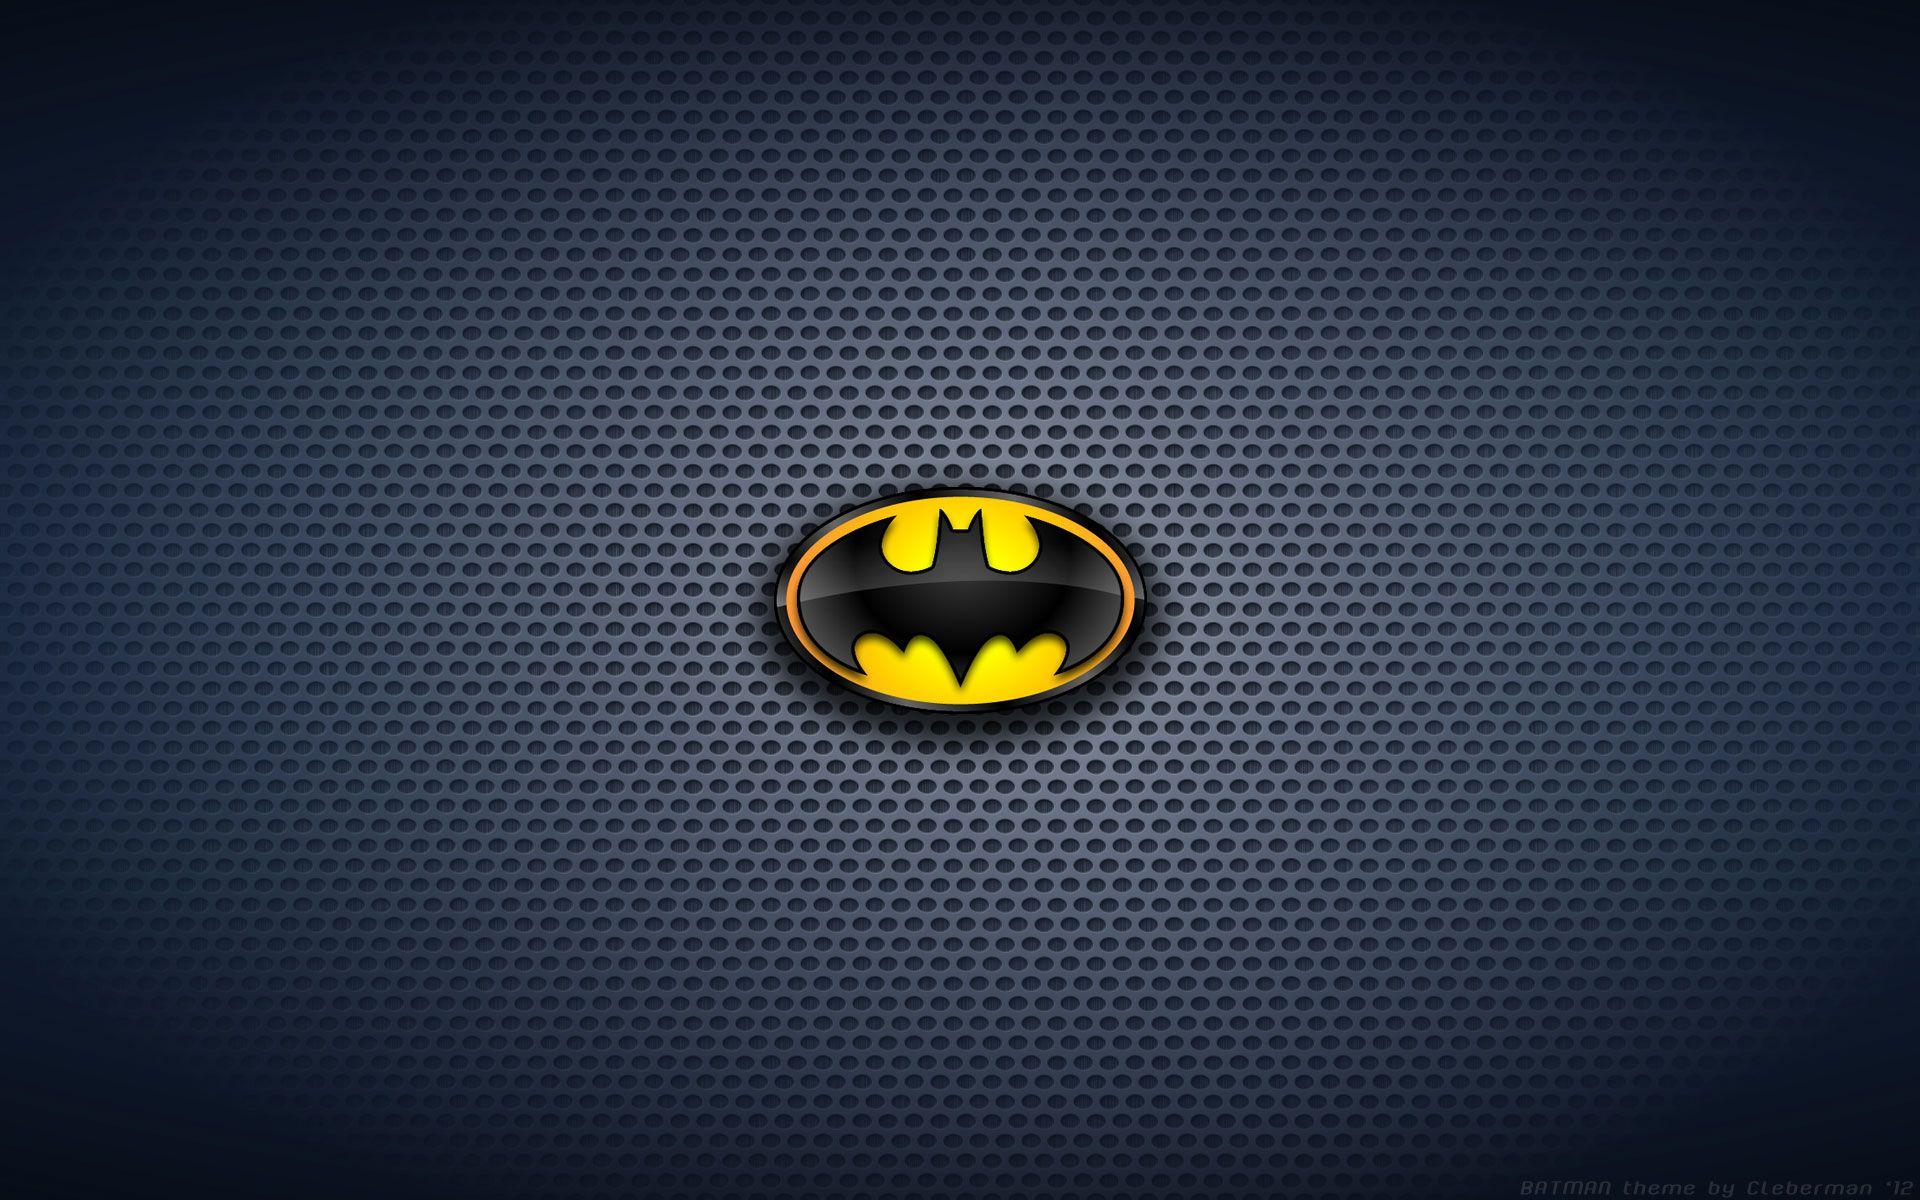 Batman Logo iPhone 5 Wallpaper Image & Picture